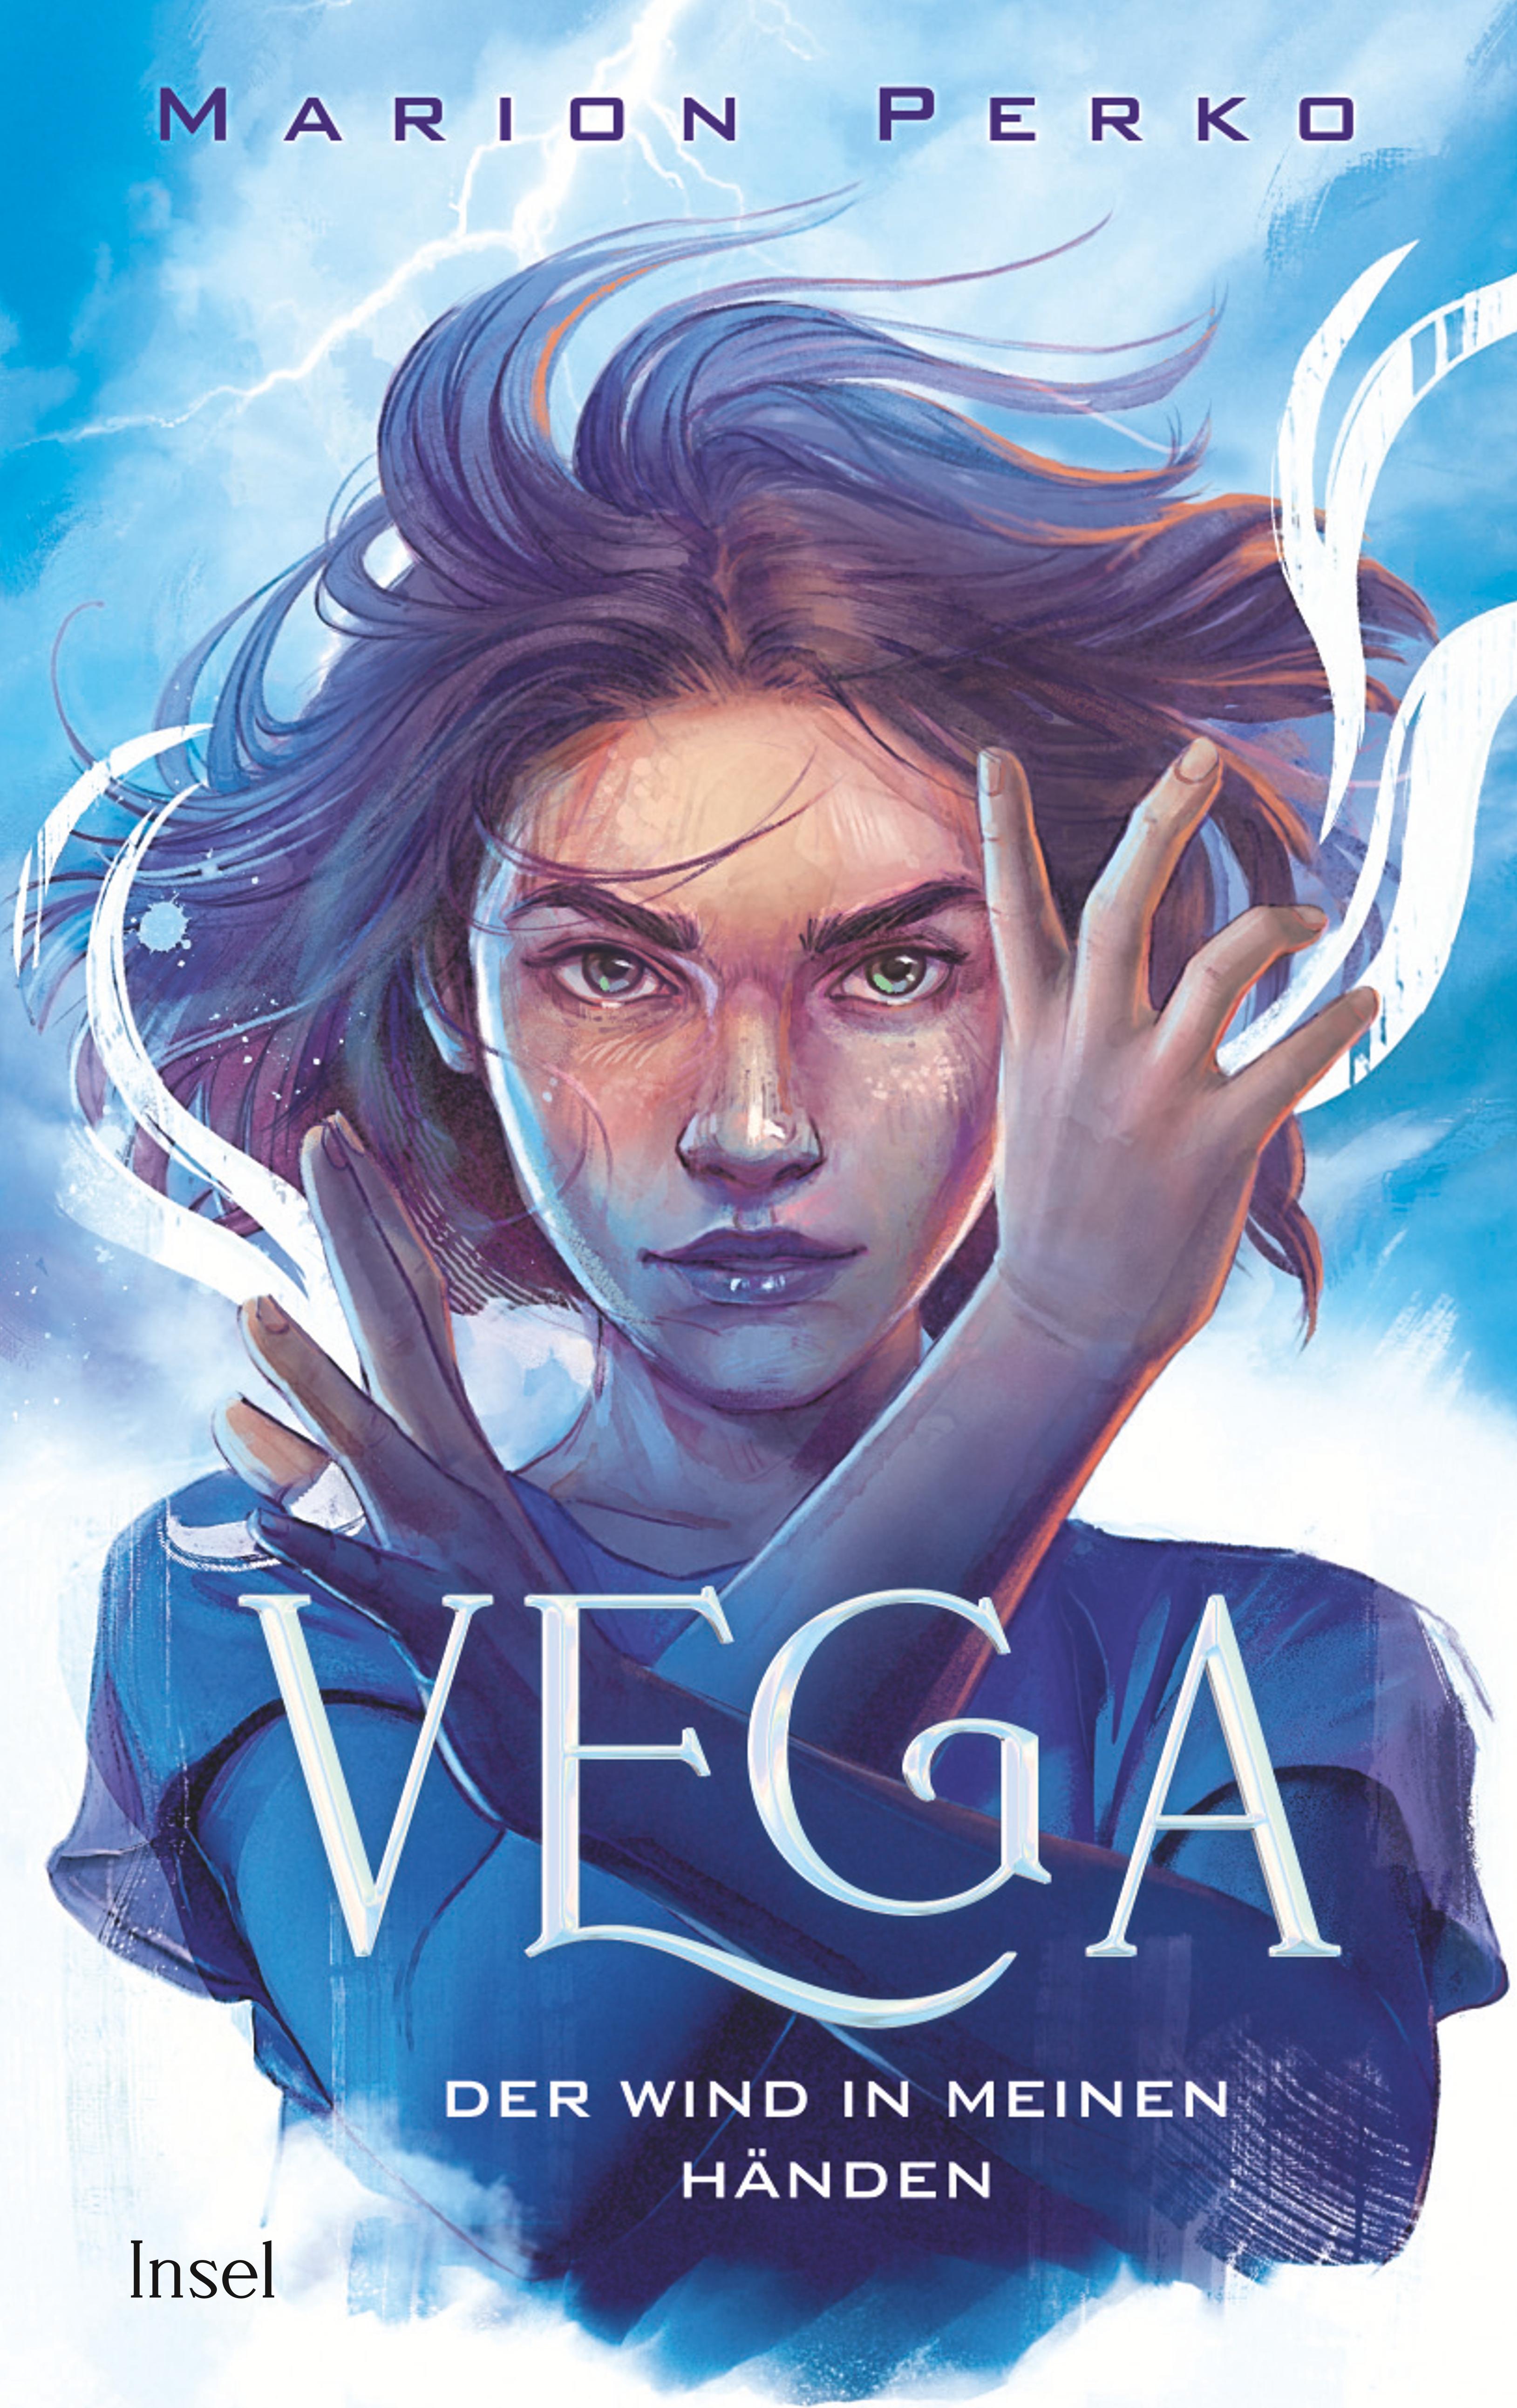 Buchcover "Vega", Insel 